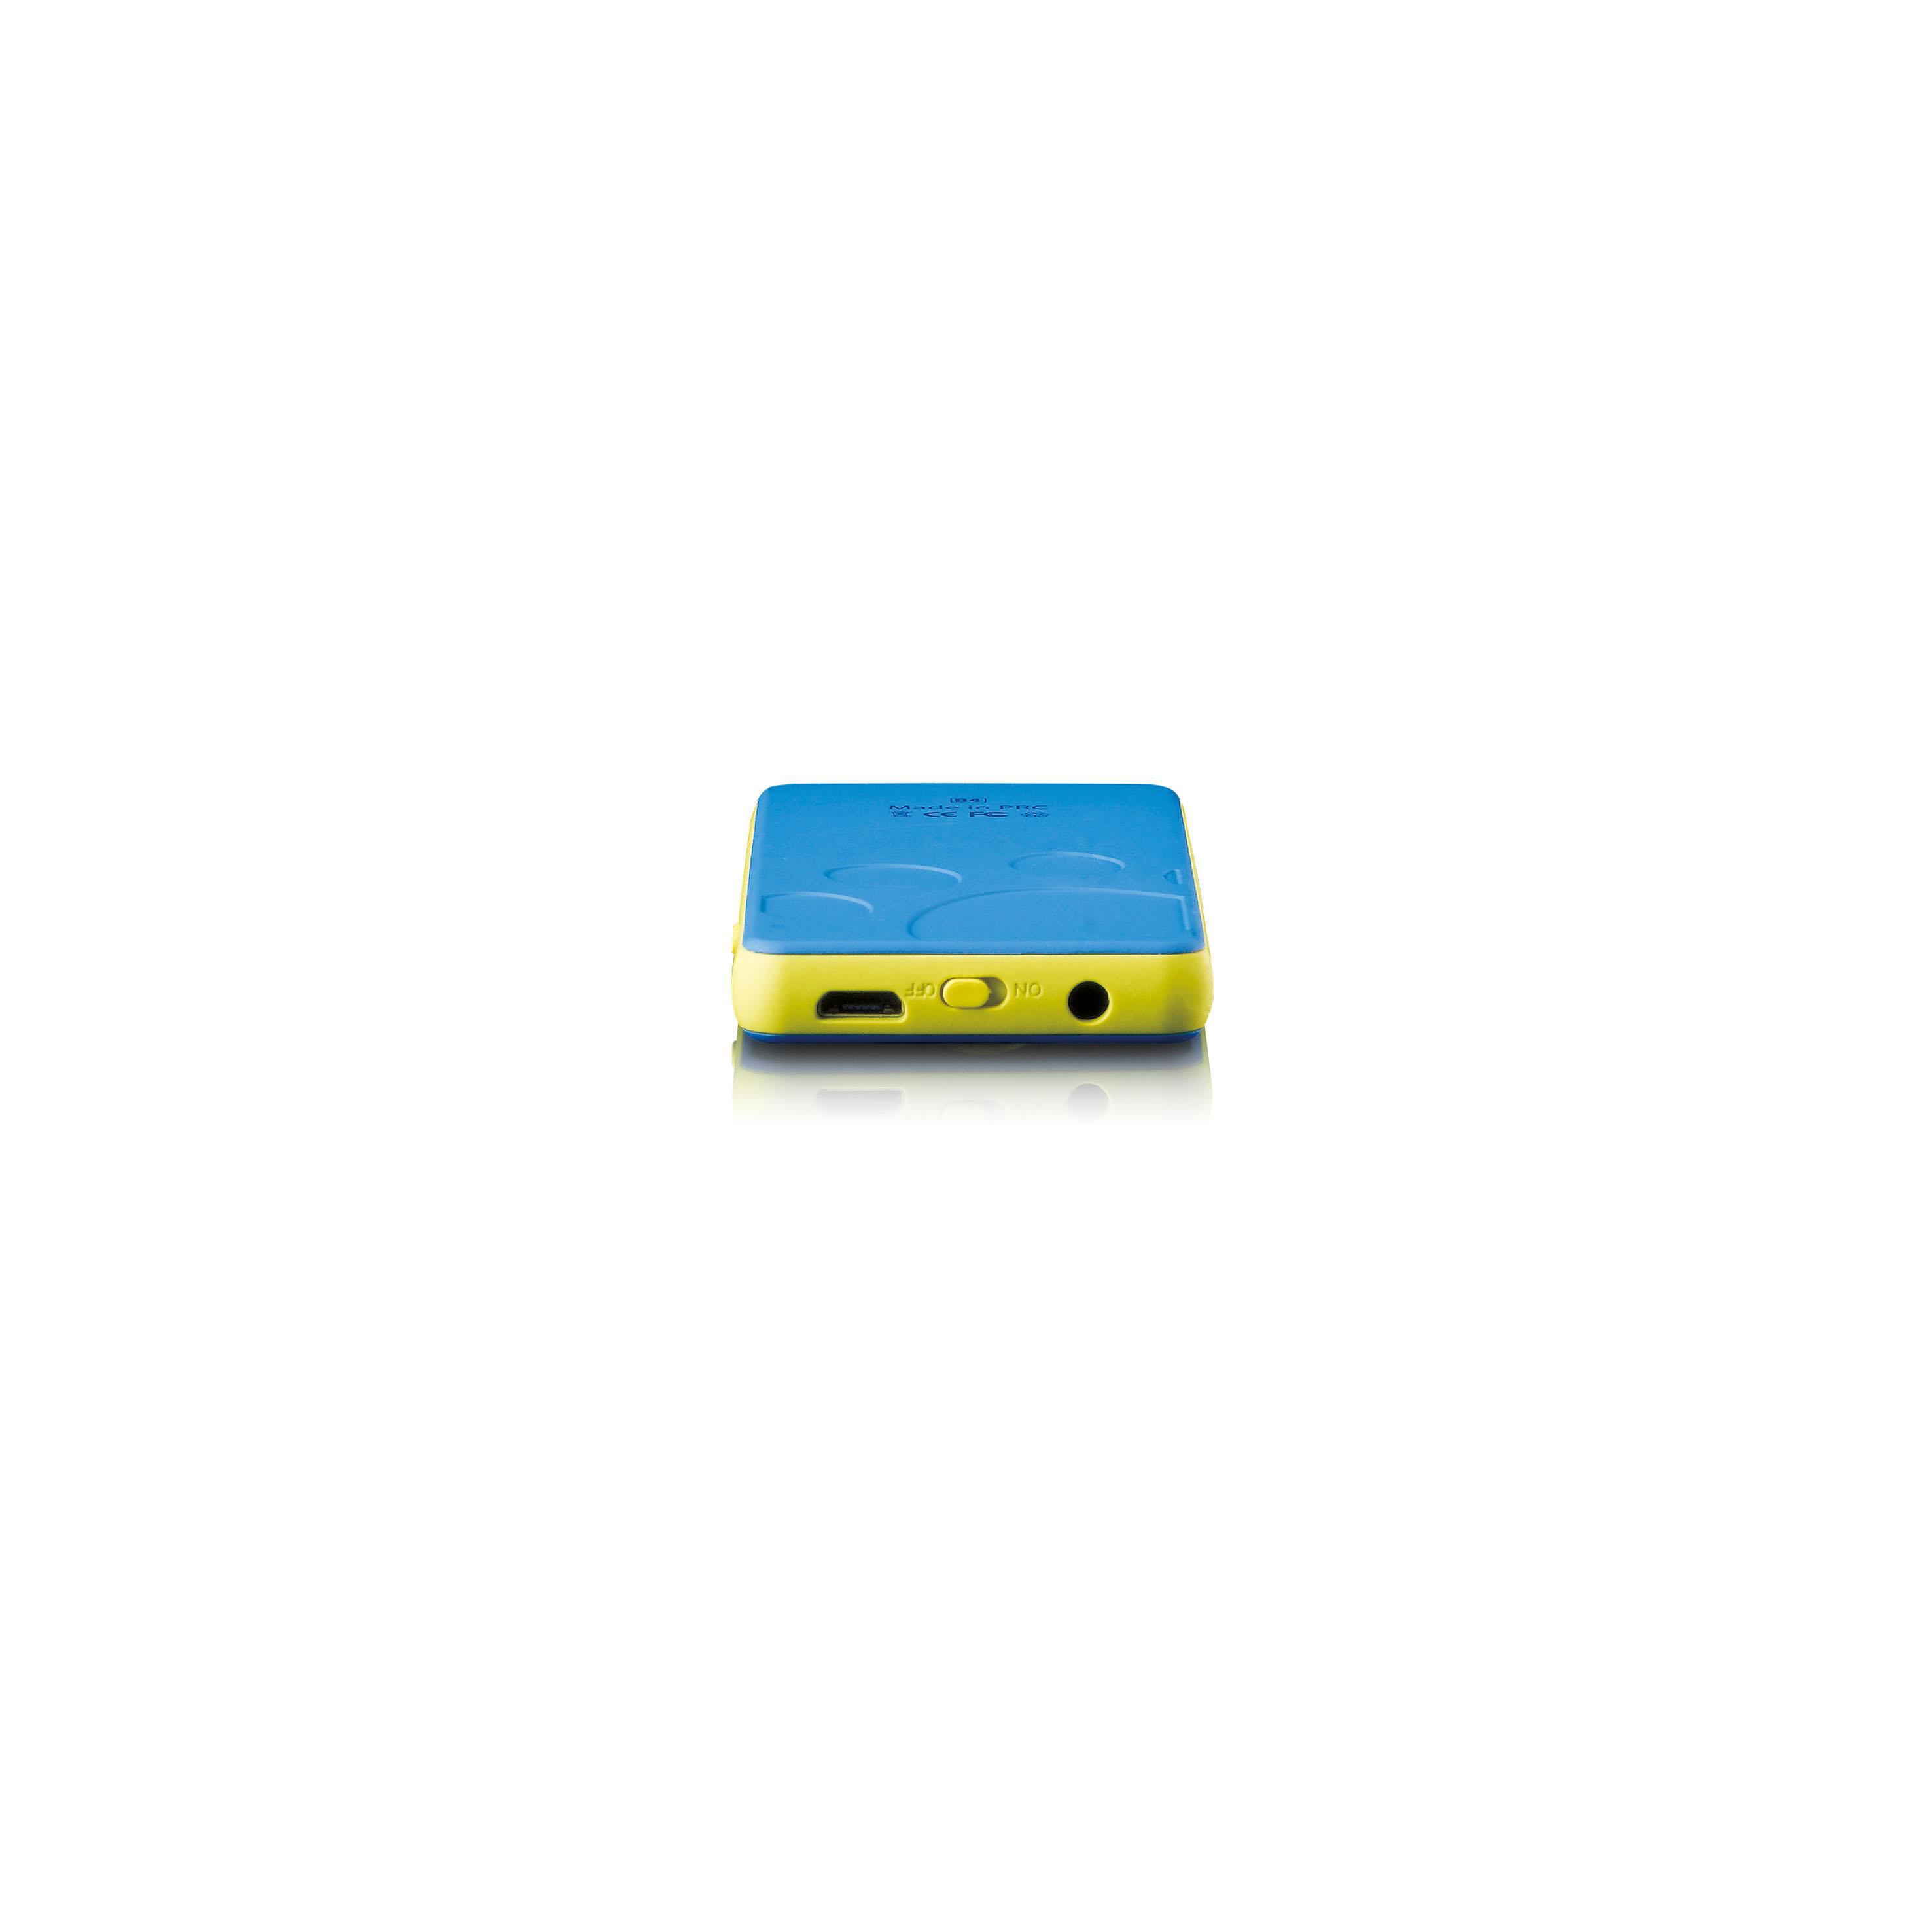 LENCO Xemio-560 MP3 GB, 8 Player Blau